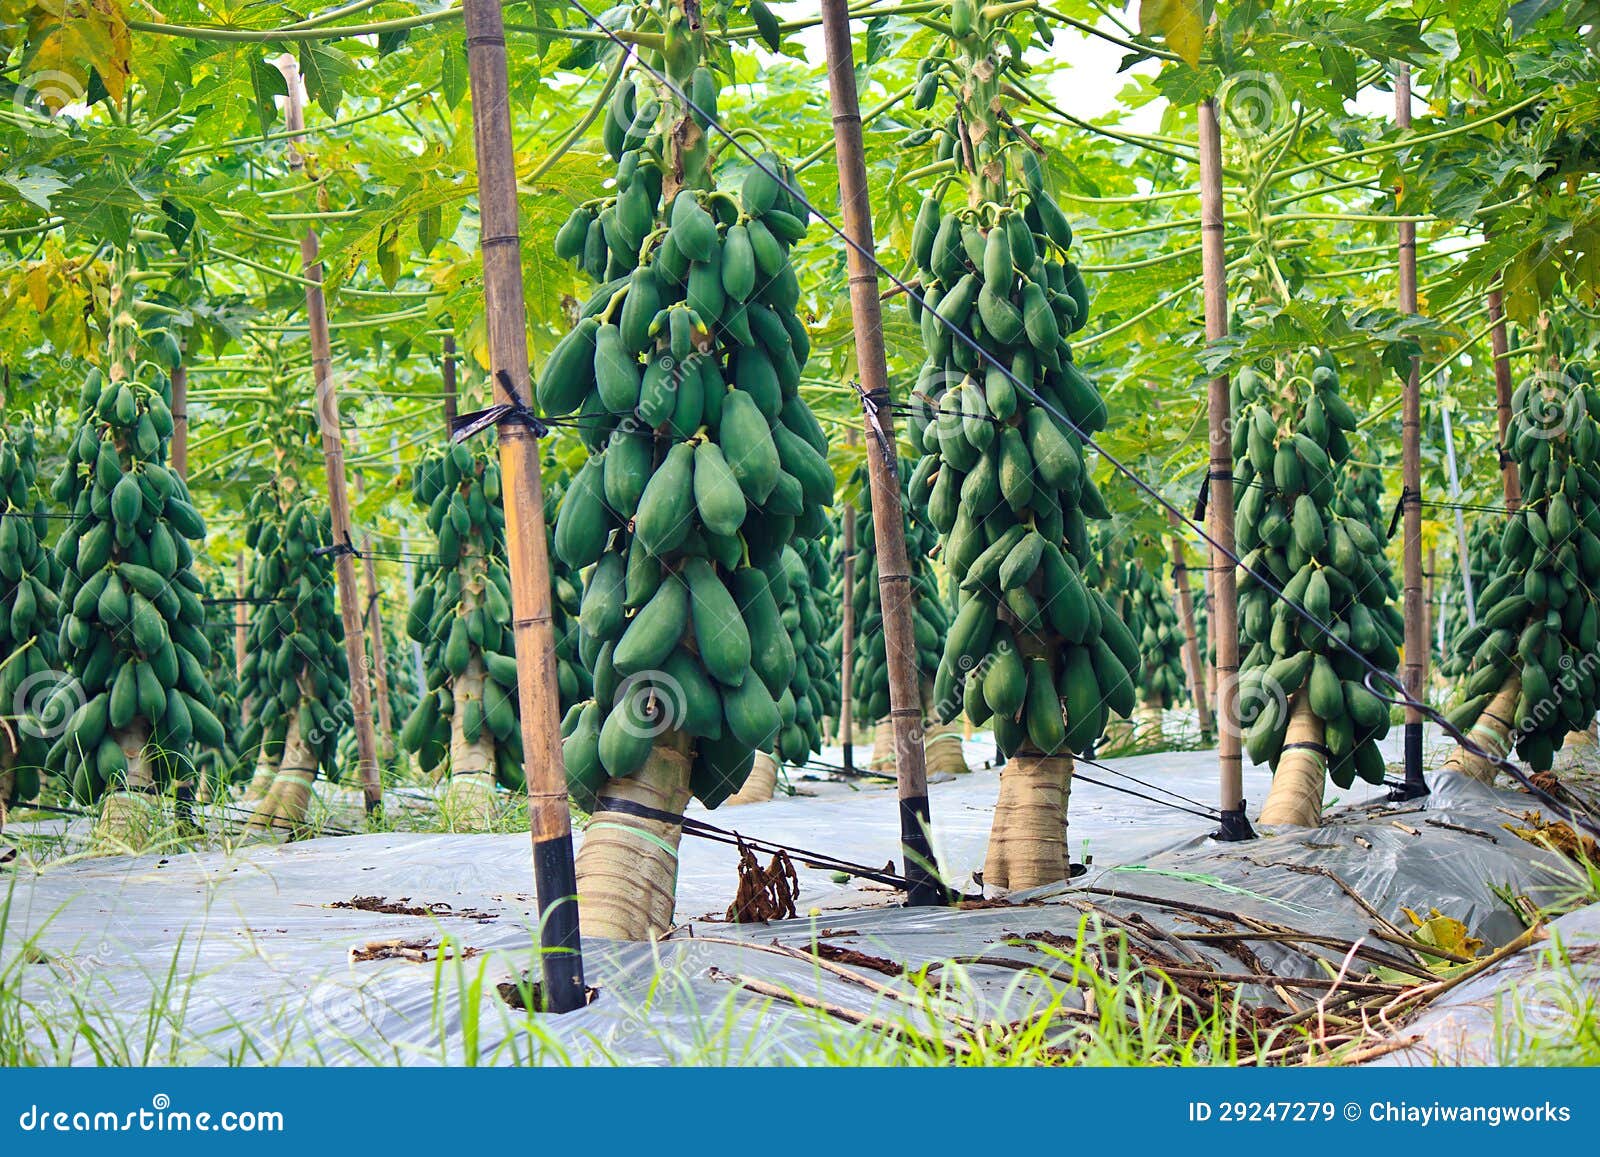 cultivation-papaya-29247279.jpg